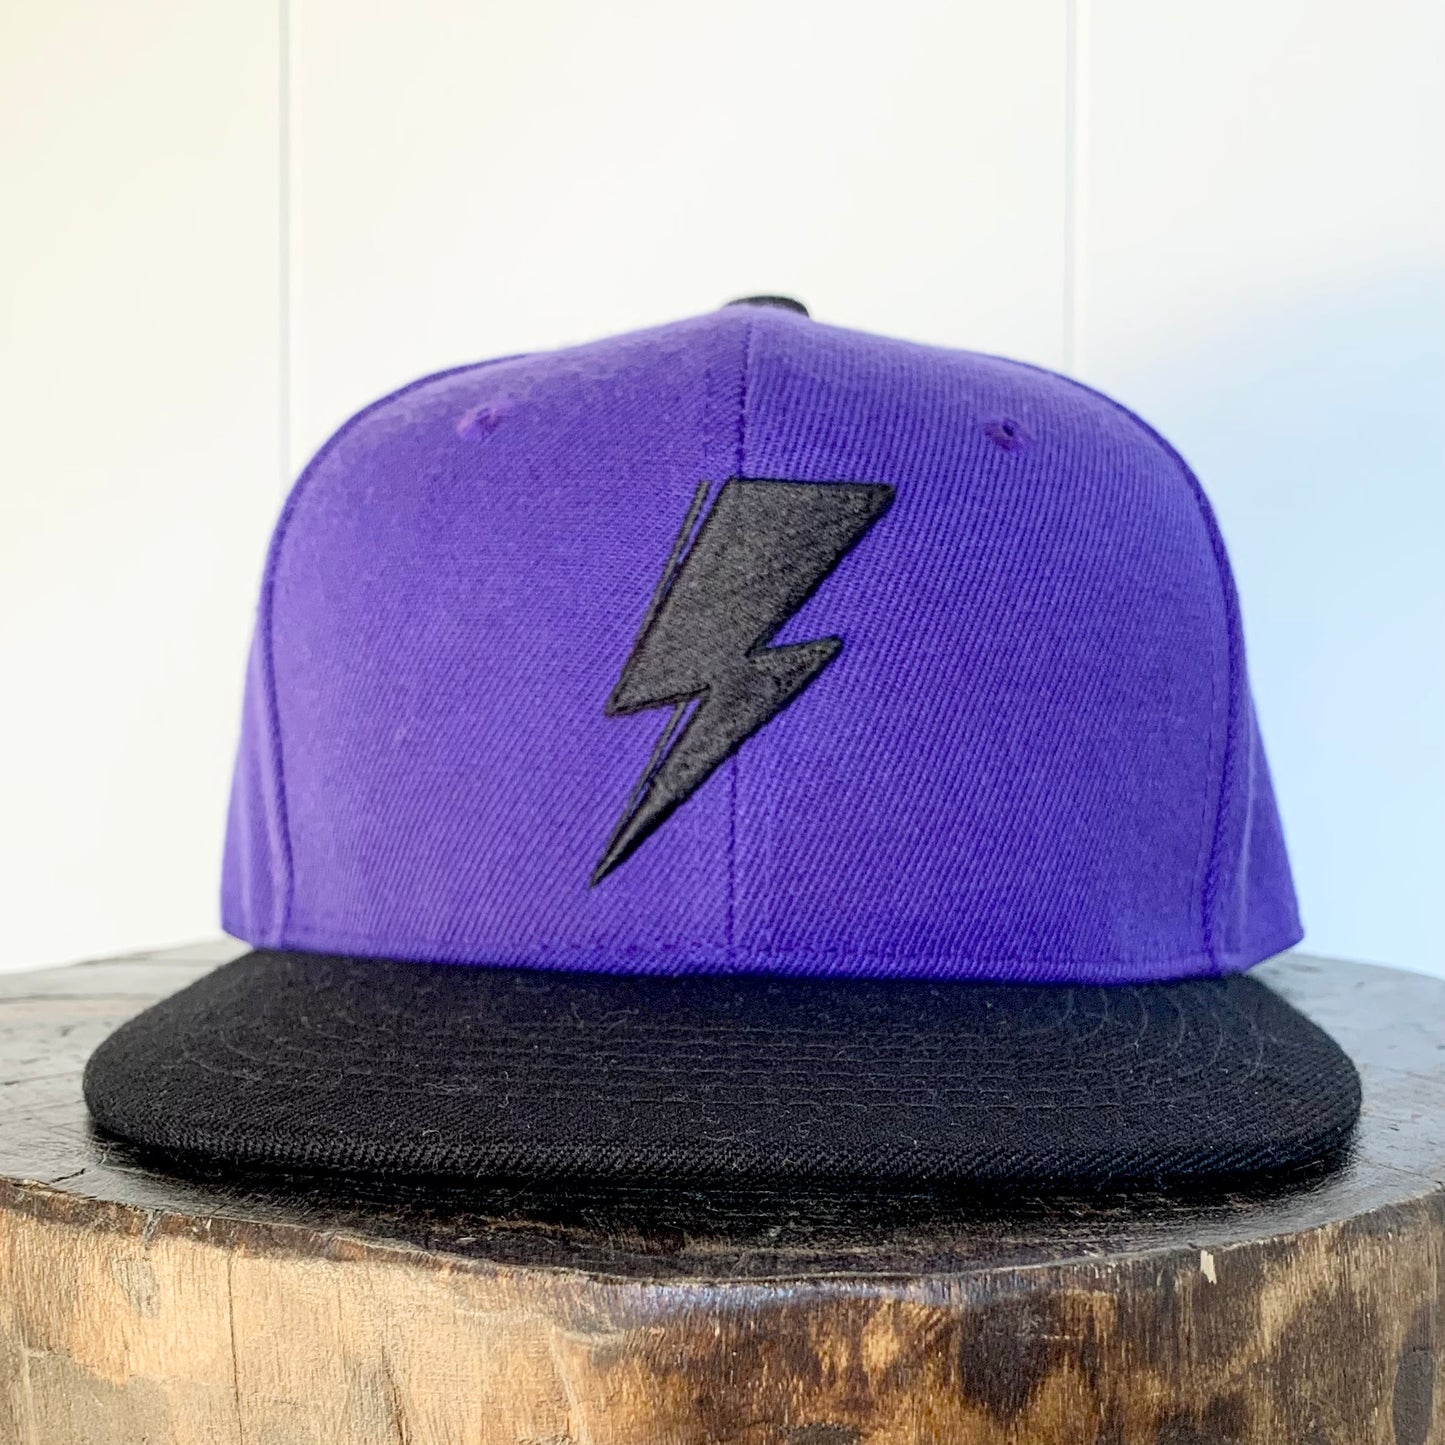 Svolta Youth Child Kids Boys Girls snapback hats 3D embroidered ightning bolt purple black